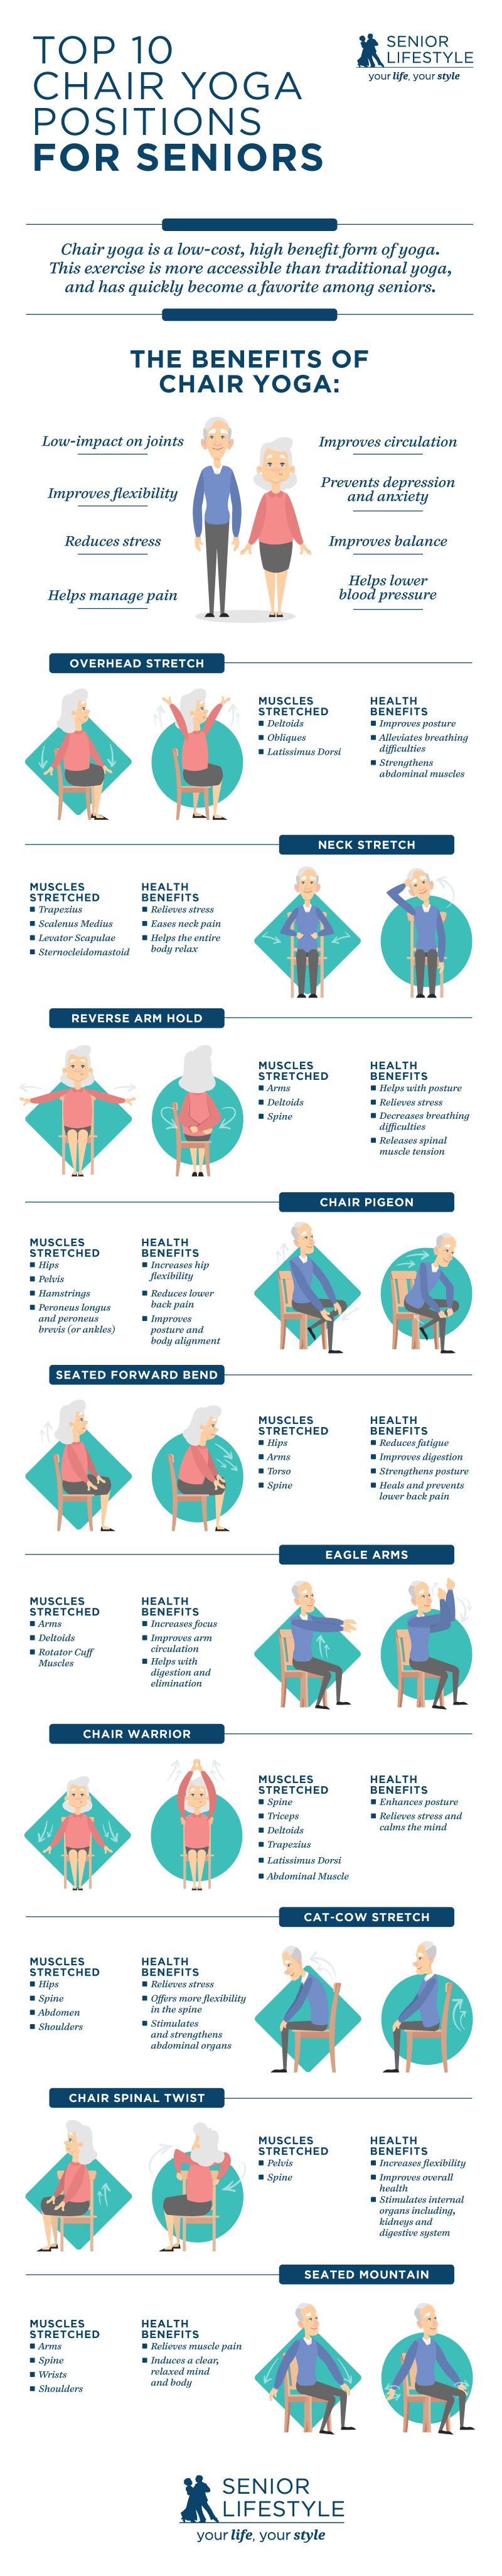 chair yoga benefits